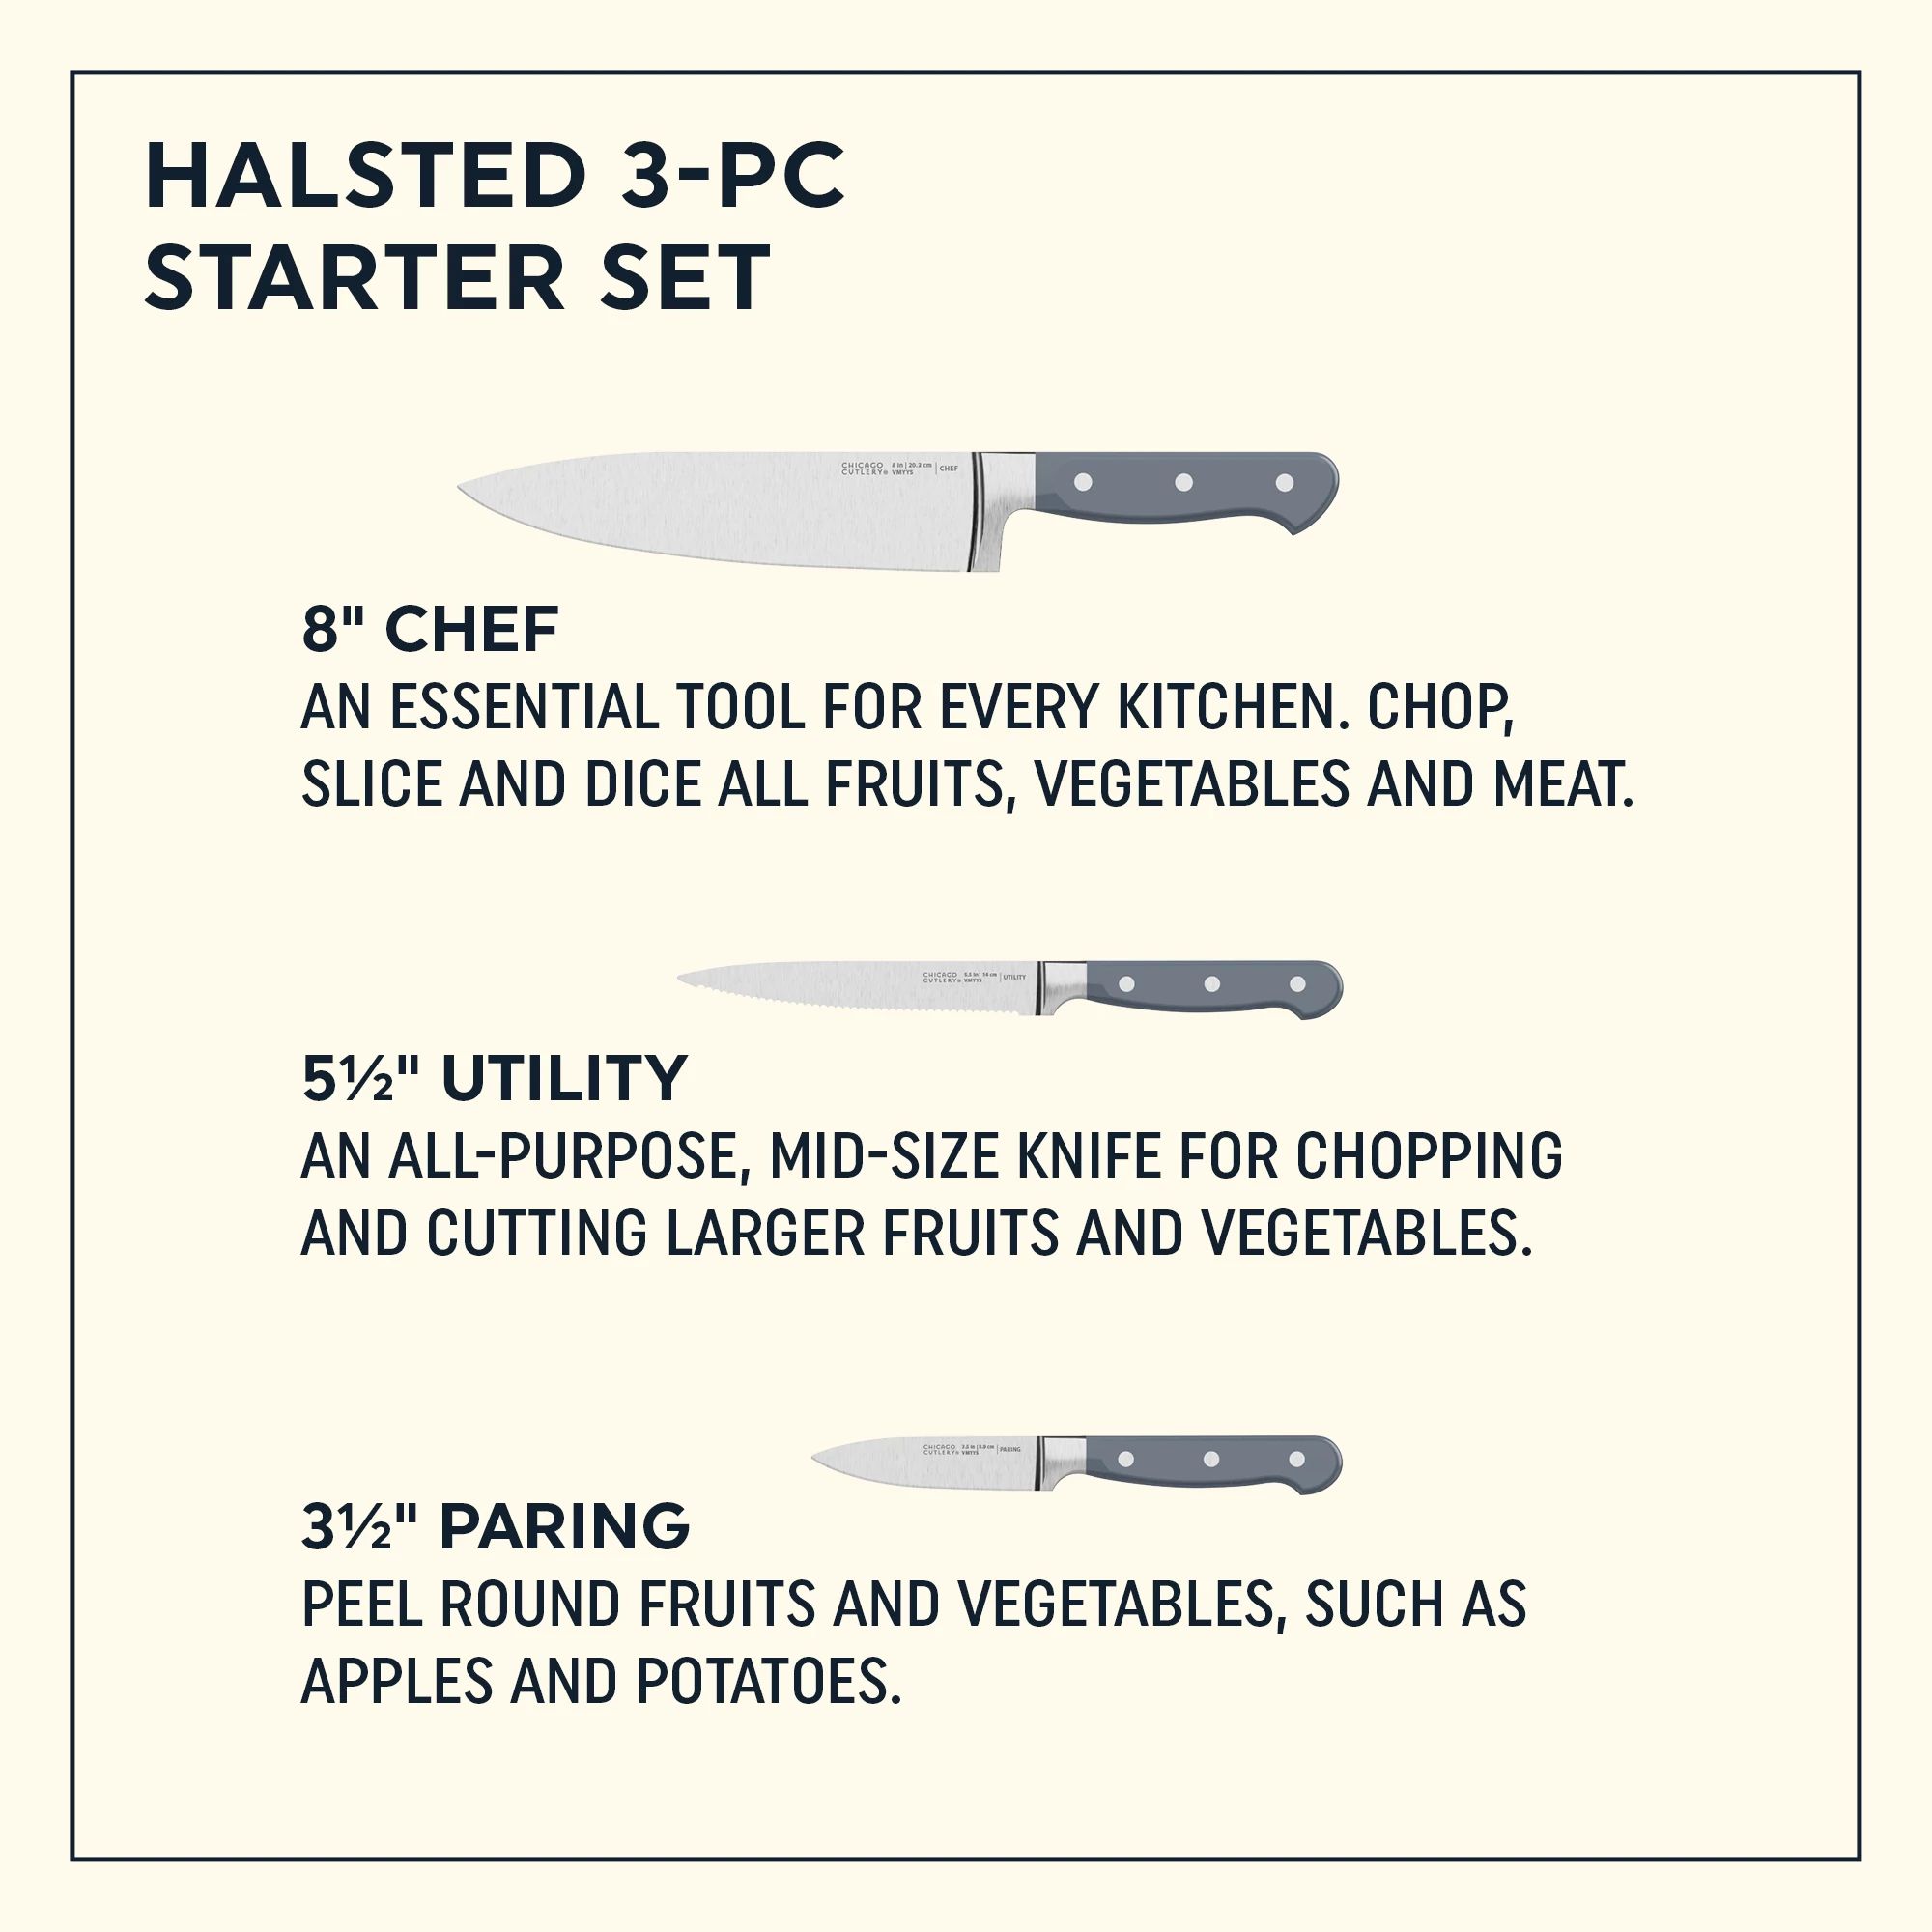 Chicago Cutlery 4-Piece Walnut Tradition Wooden Handle Steak Knife Set (3-pack)